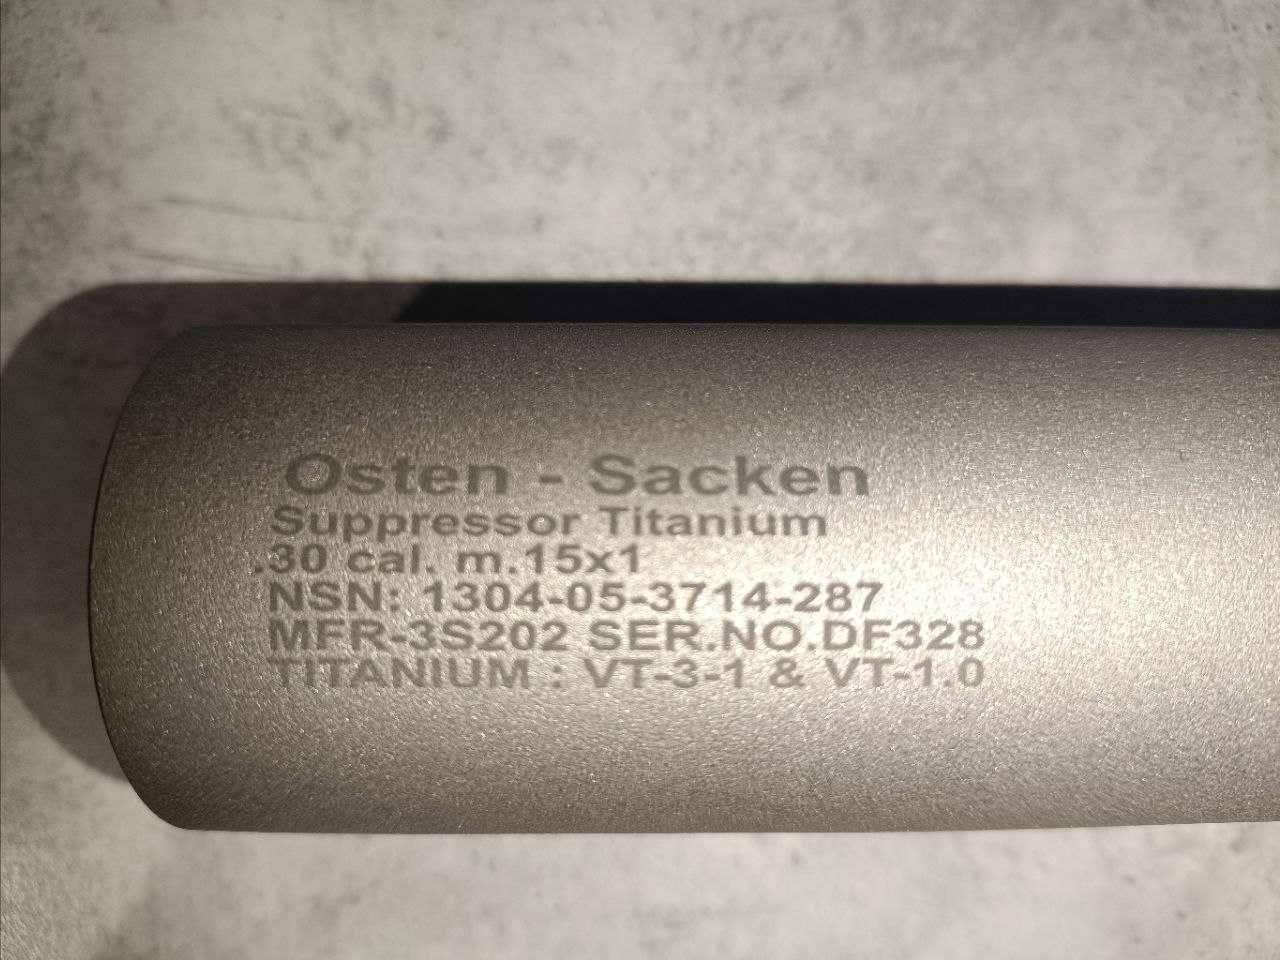 Глушник Osten- Sacken Suppressor Titanium